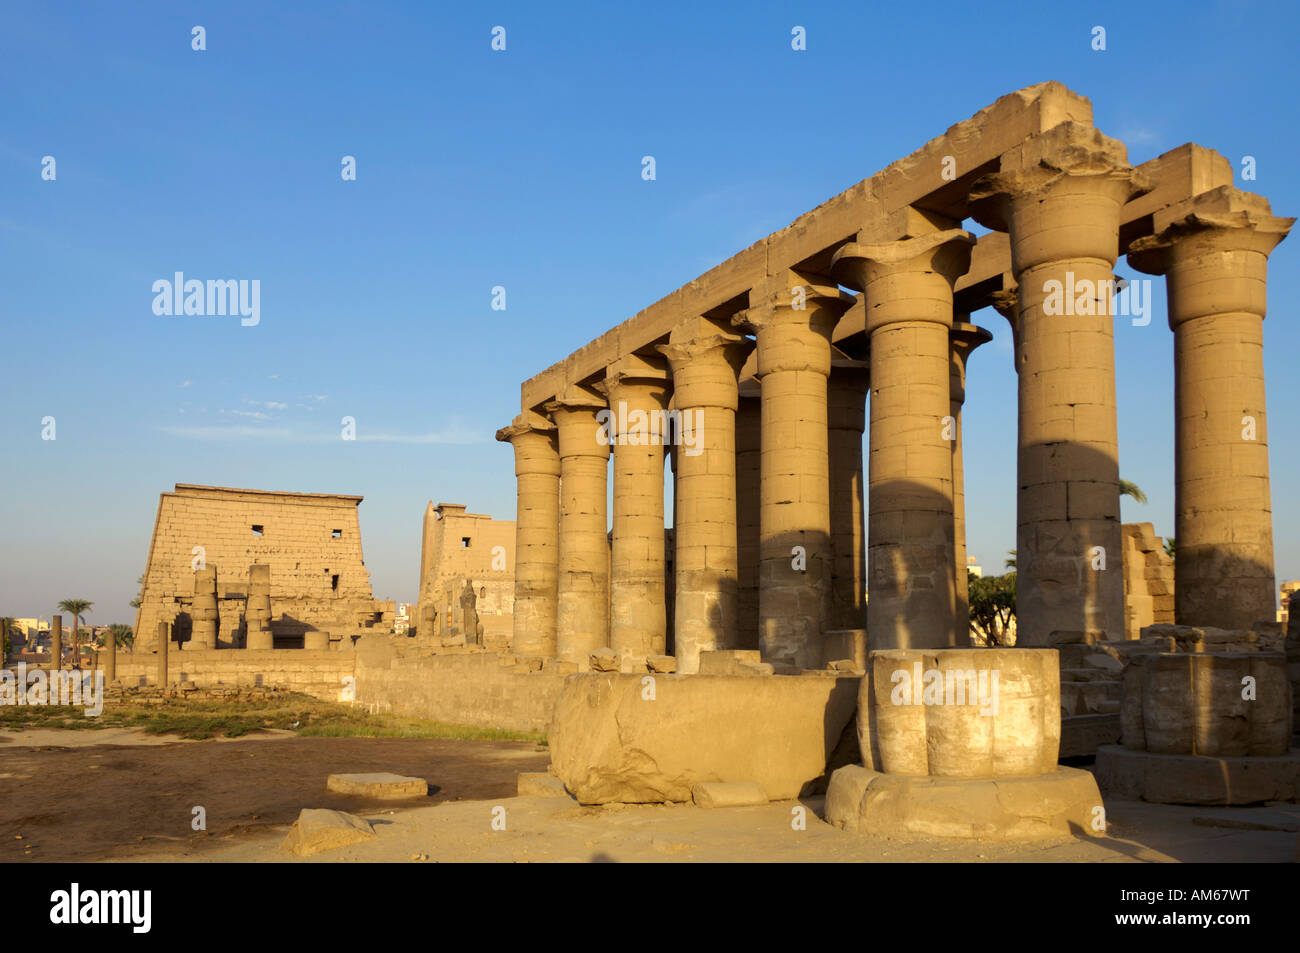 Sonne vor Gericht Spalten Luxor Tempel Ägyptens Nordafrika Stockfoto